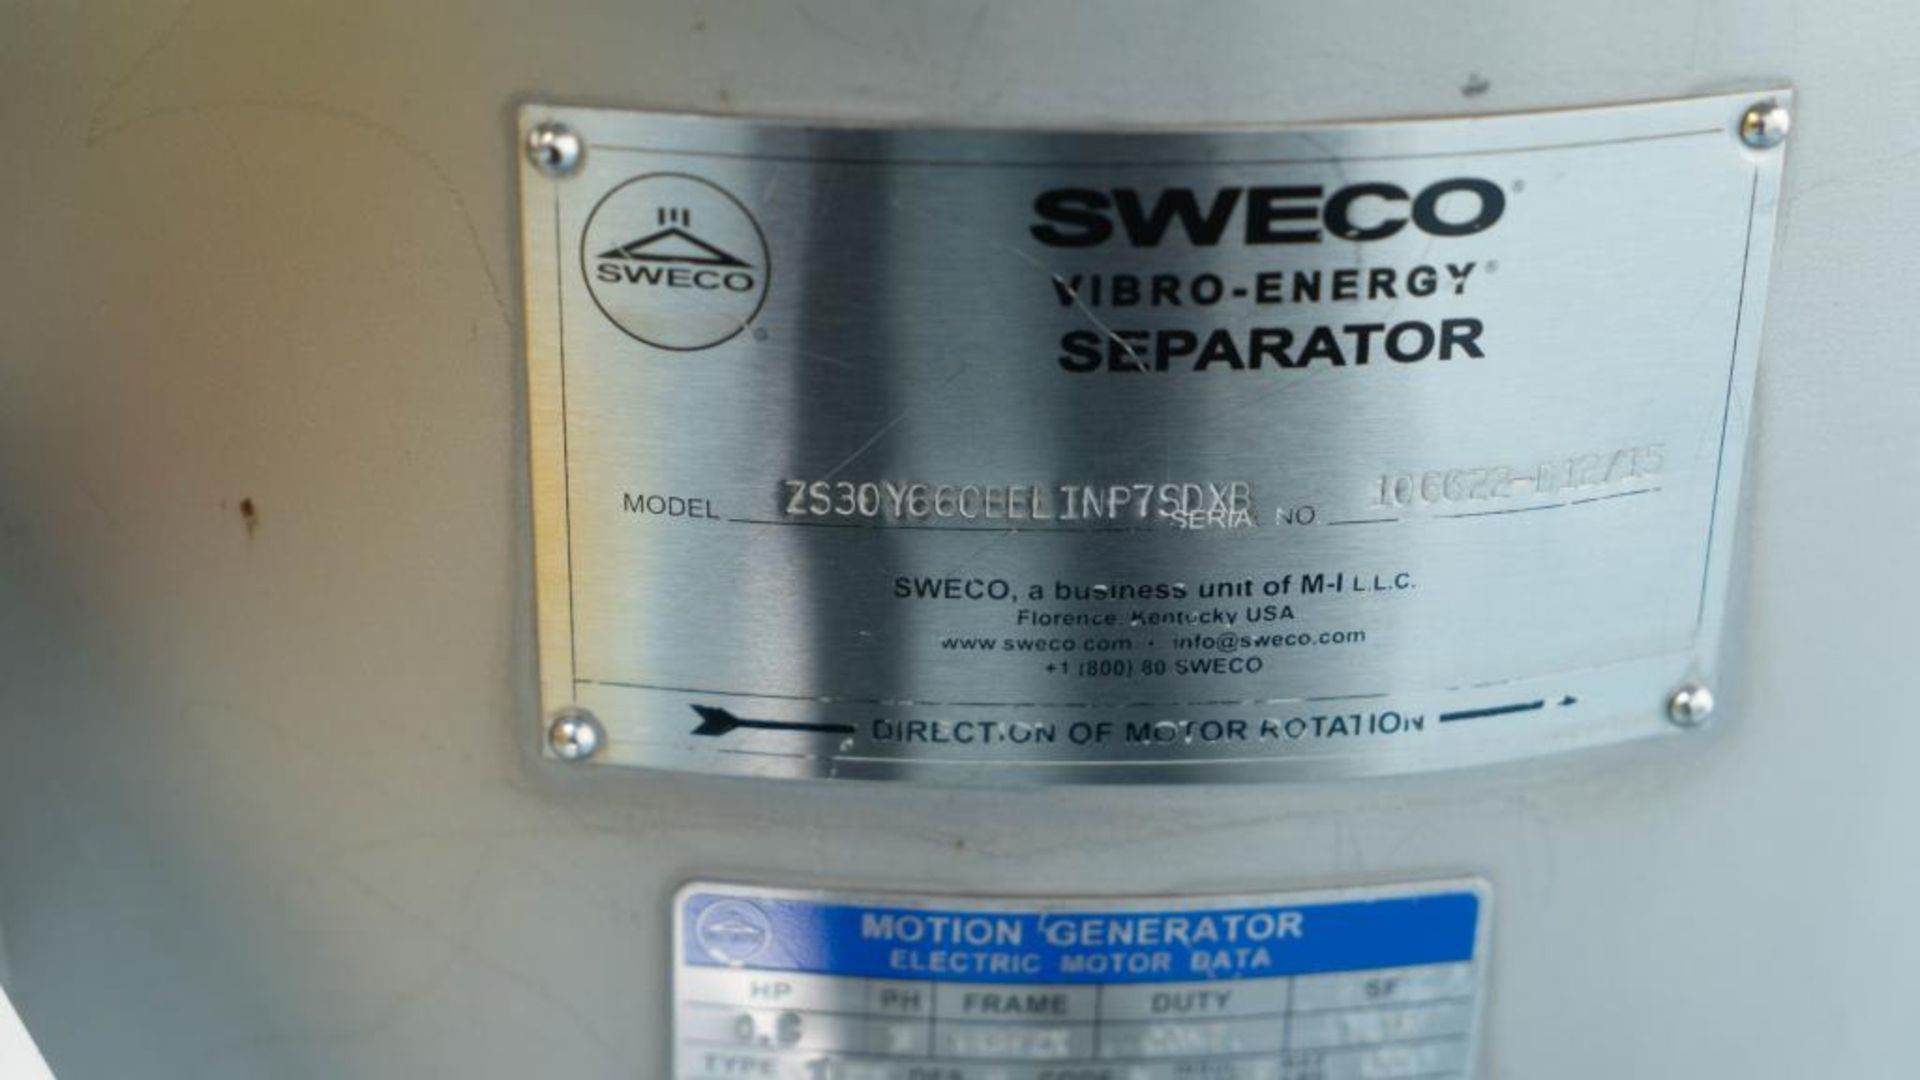 Sweco Vibro-Energy Separator - Image 8 of 11